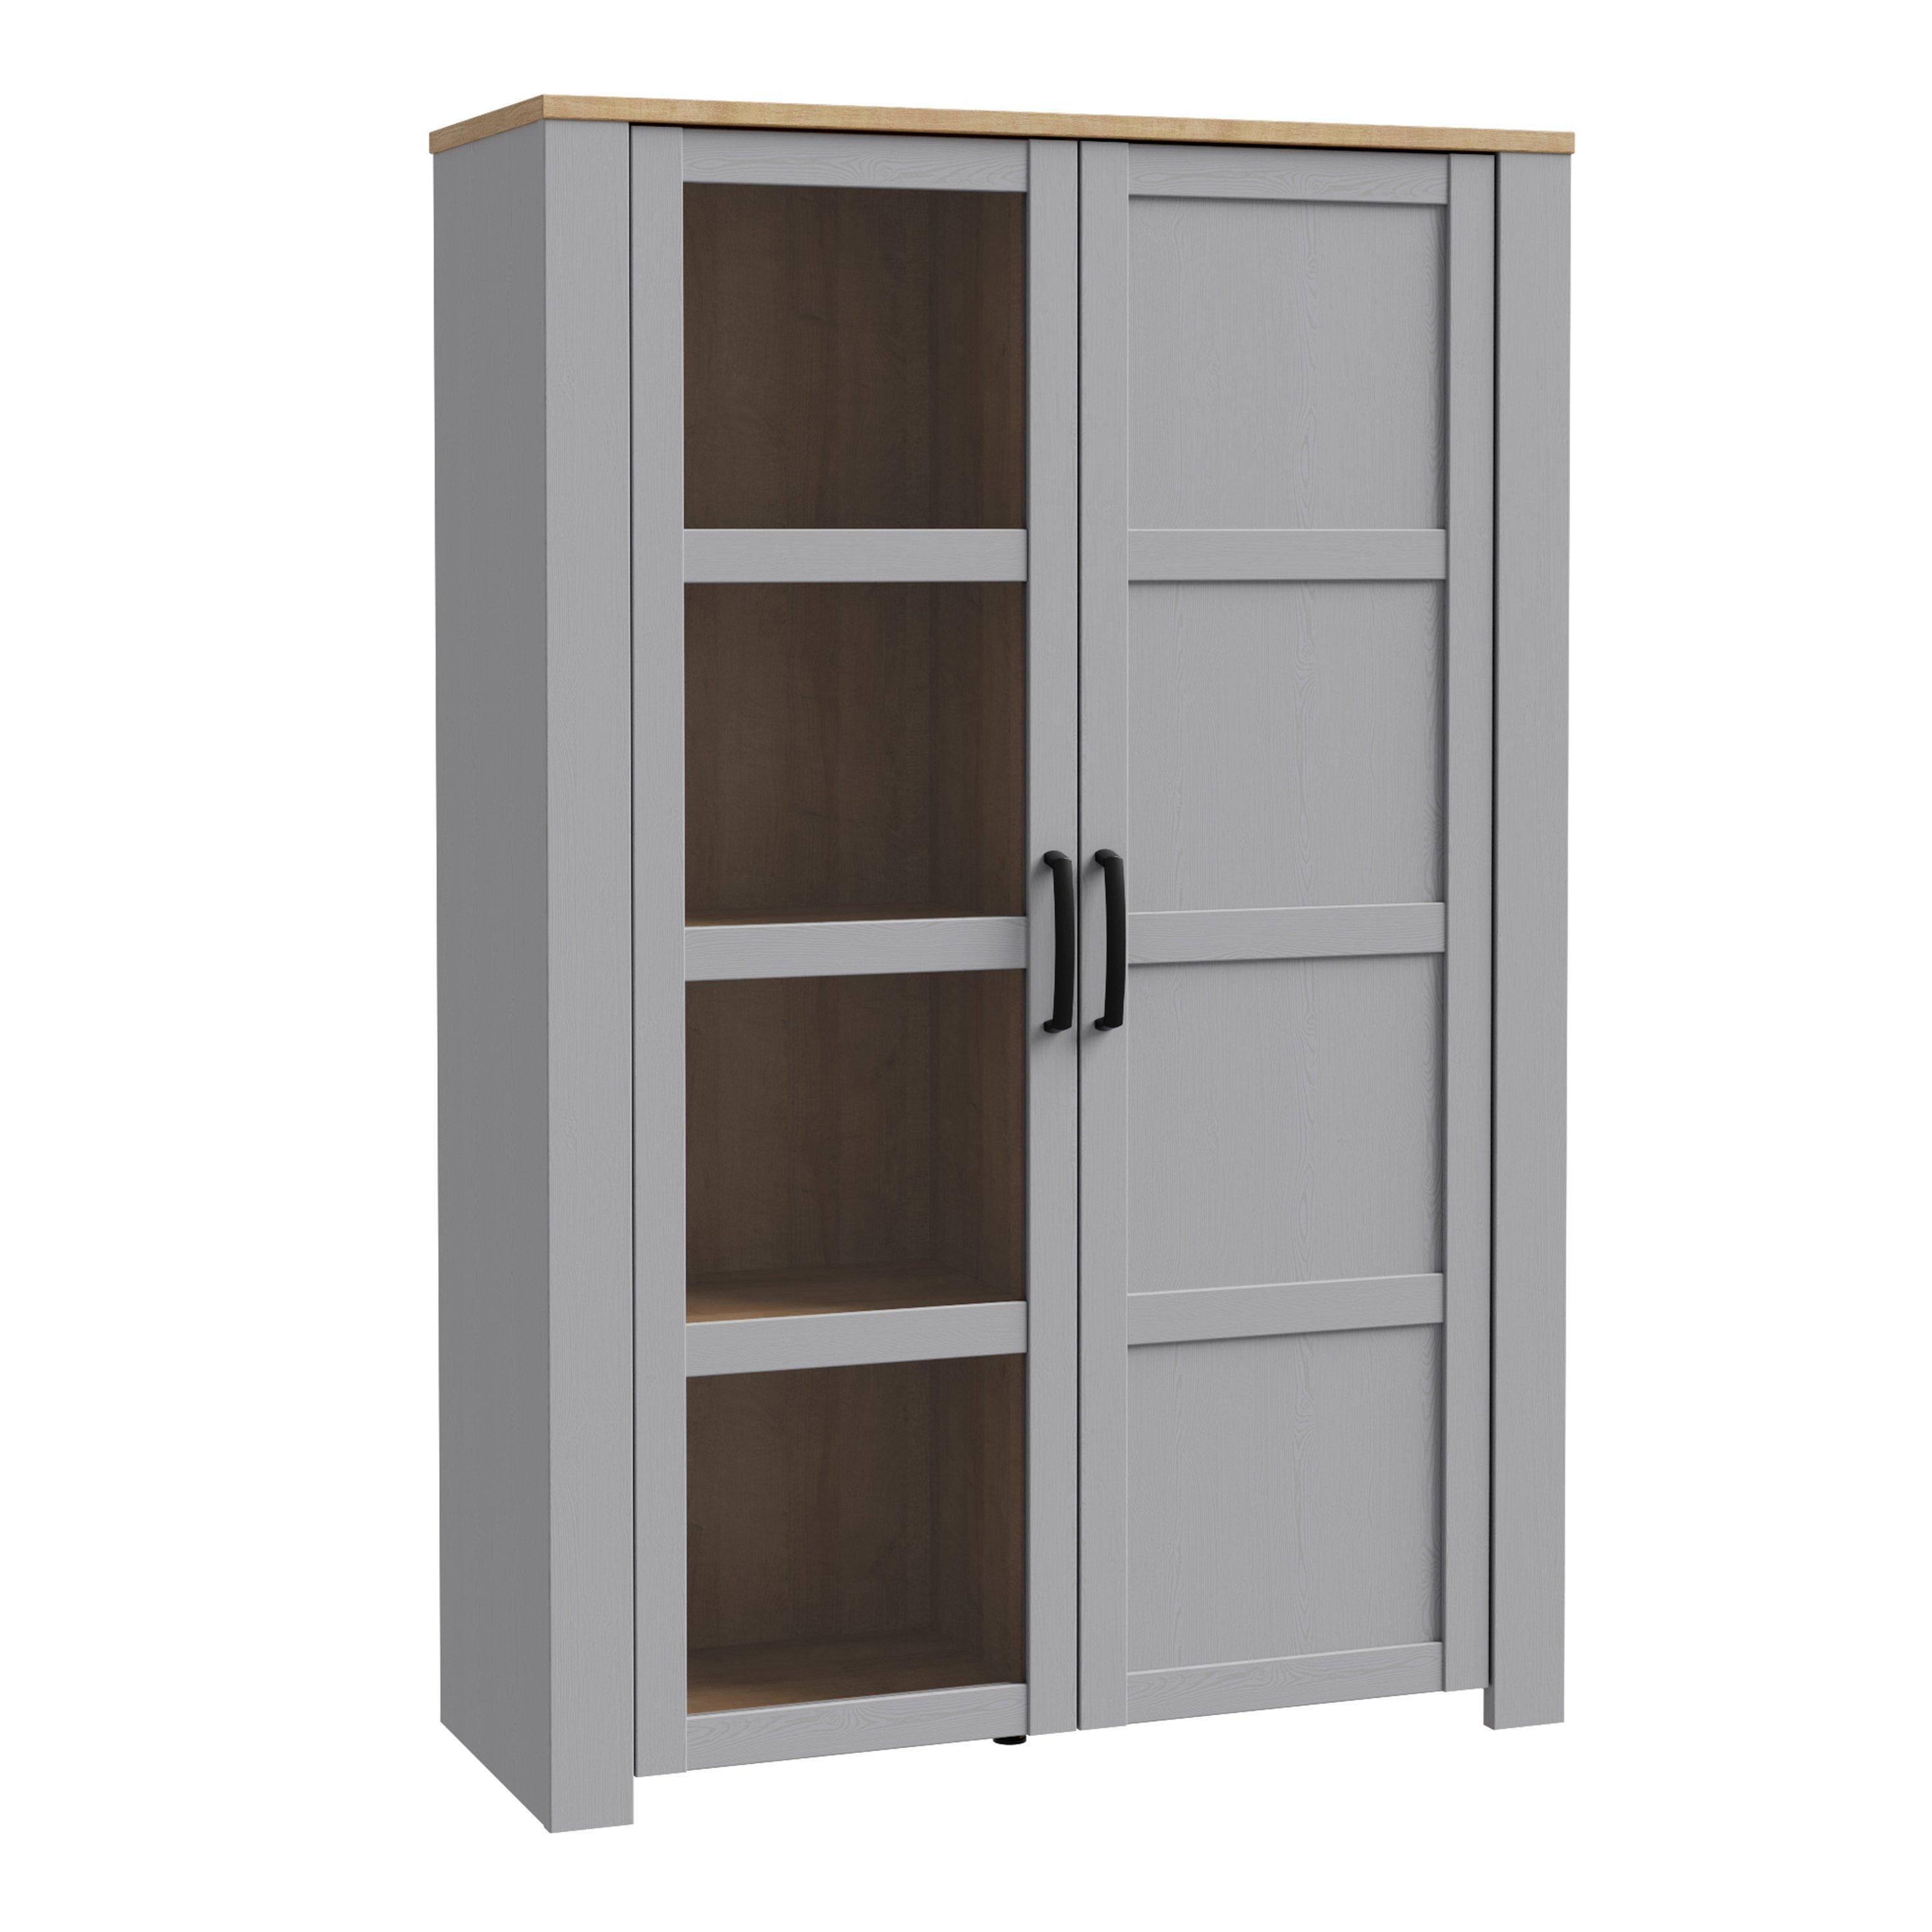 Bohol Display Cabinet - image 1